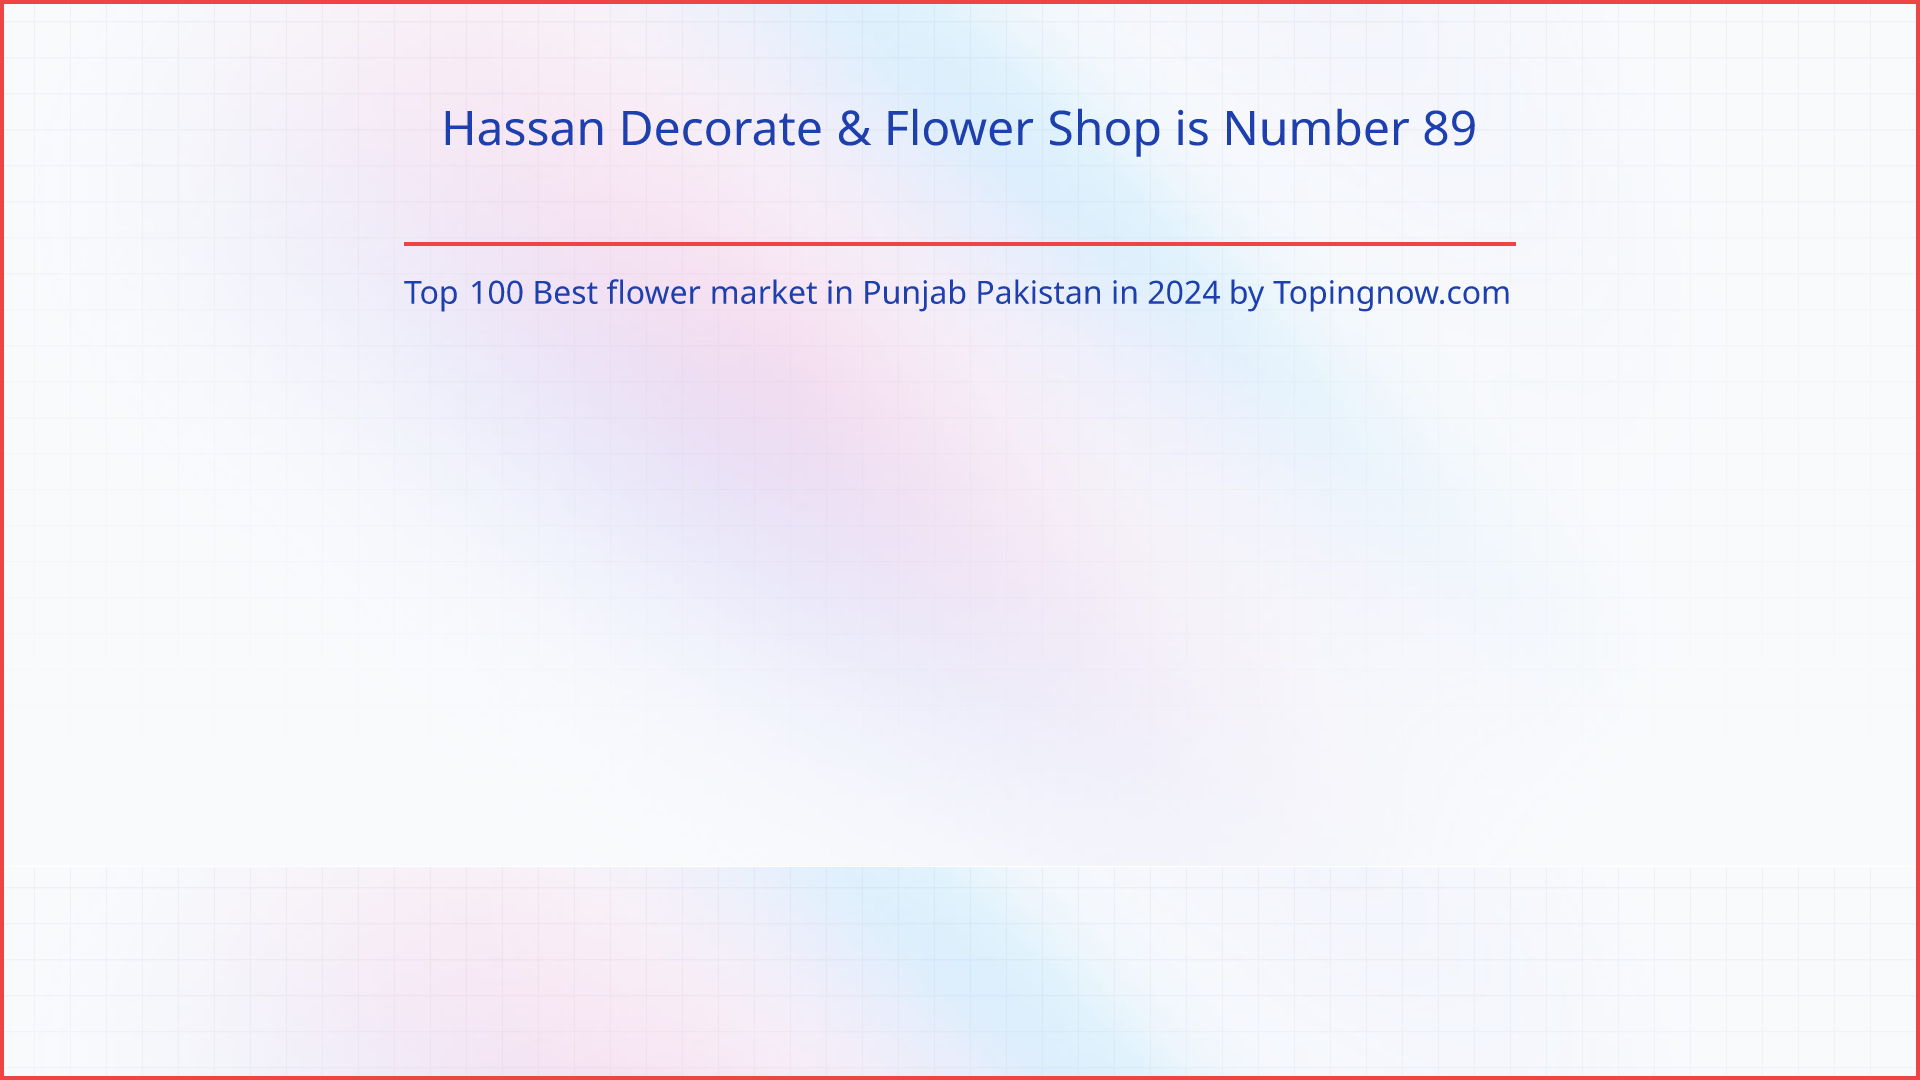 Hassan Decorate & Flower Shop: Top 100 Best flower market in Punjab Pakistan in 2024